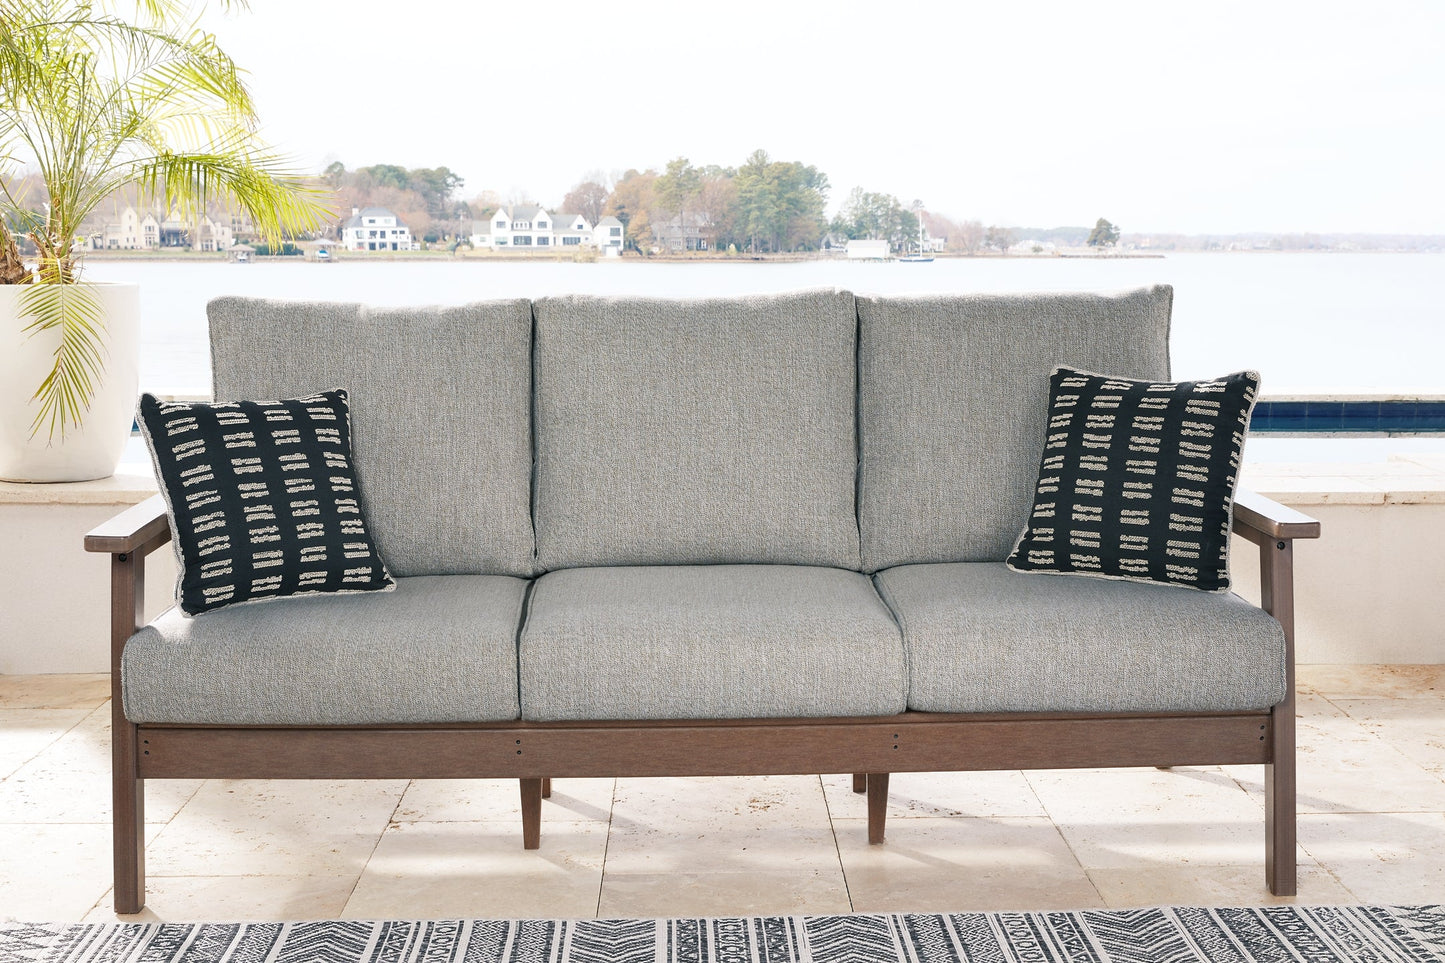 Emmeline Sofa with Cushion at Cloud 9 Mattress & Furniture furniture, home furnishing, home decor